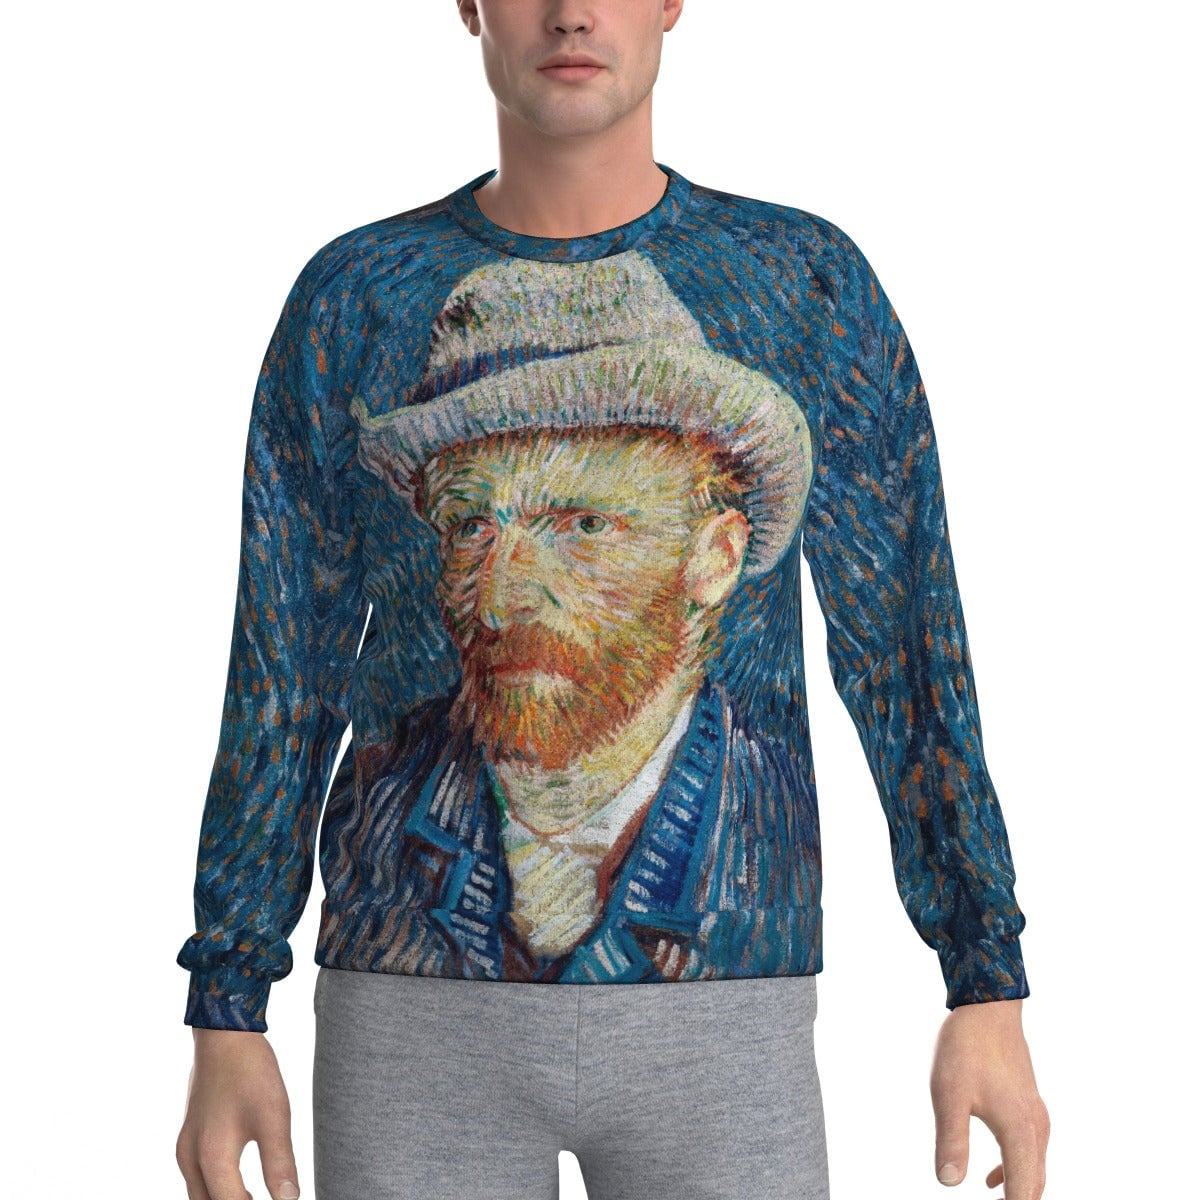 Self-Portrait with Grey Felt Hat Van Gogh Sweatshirt